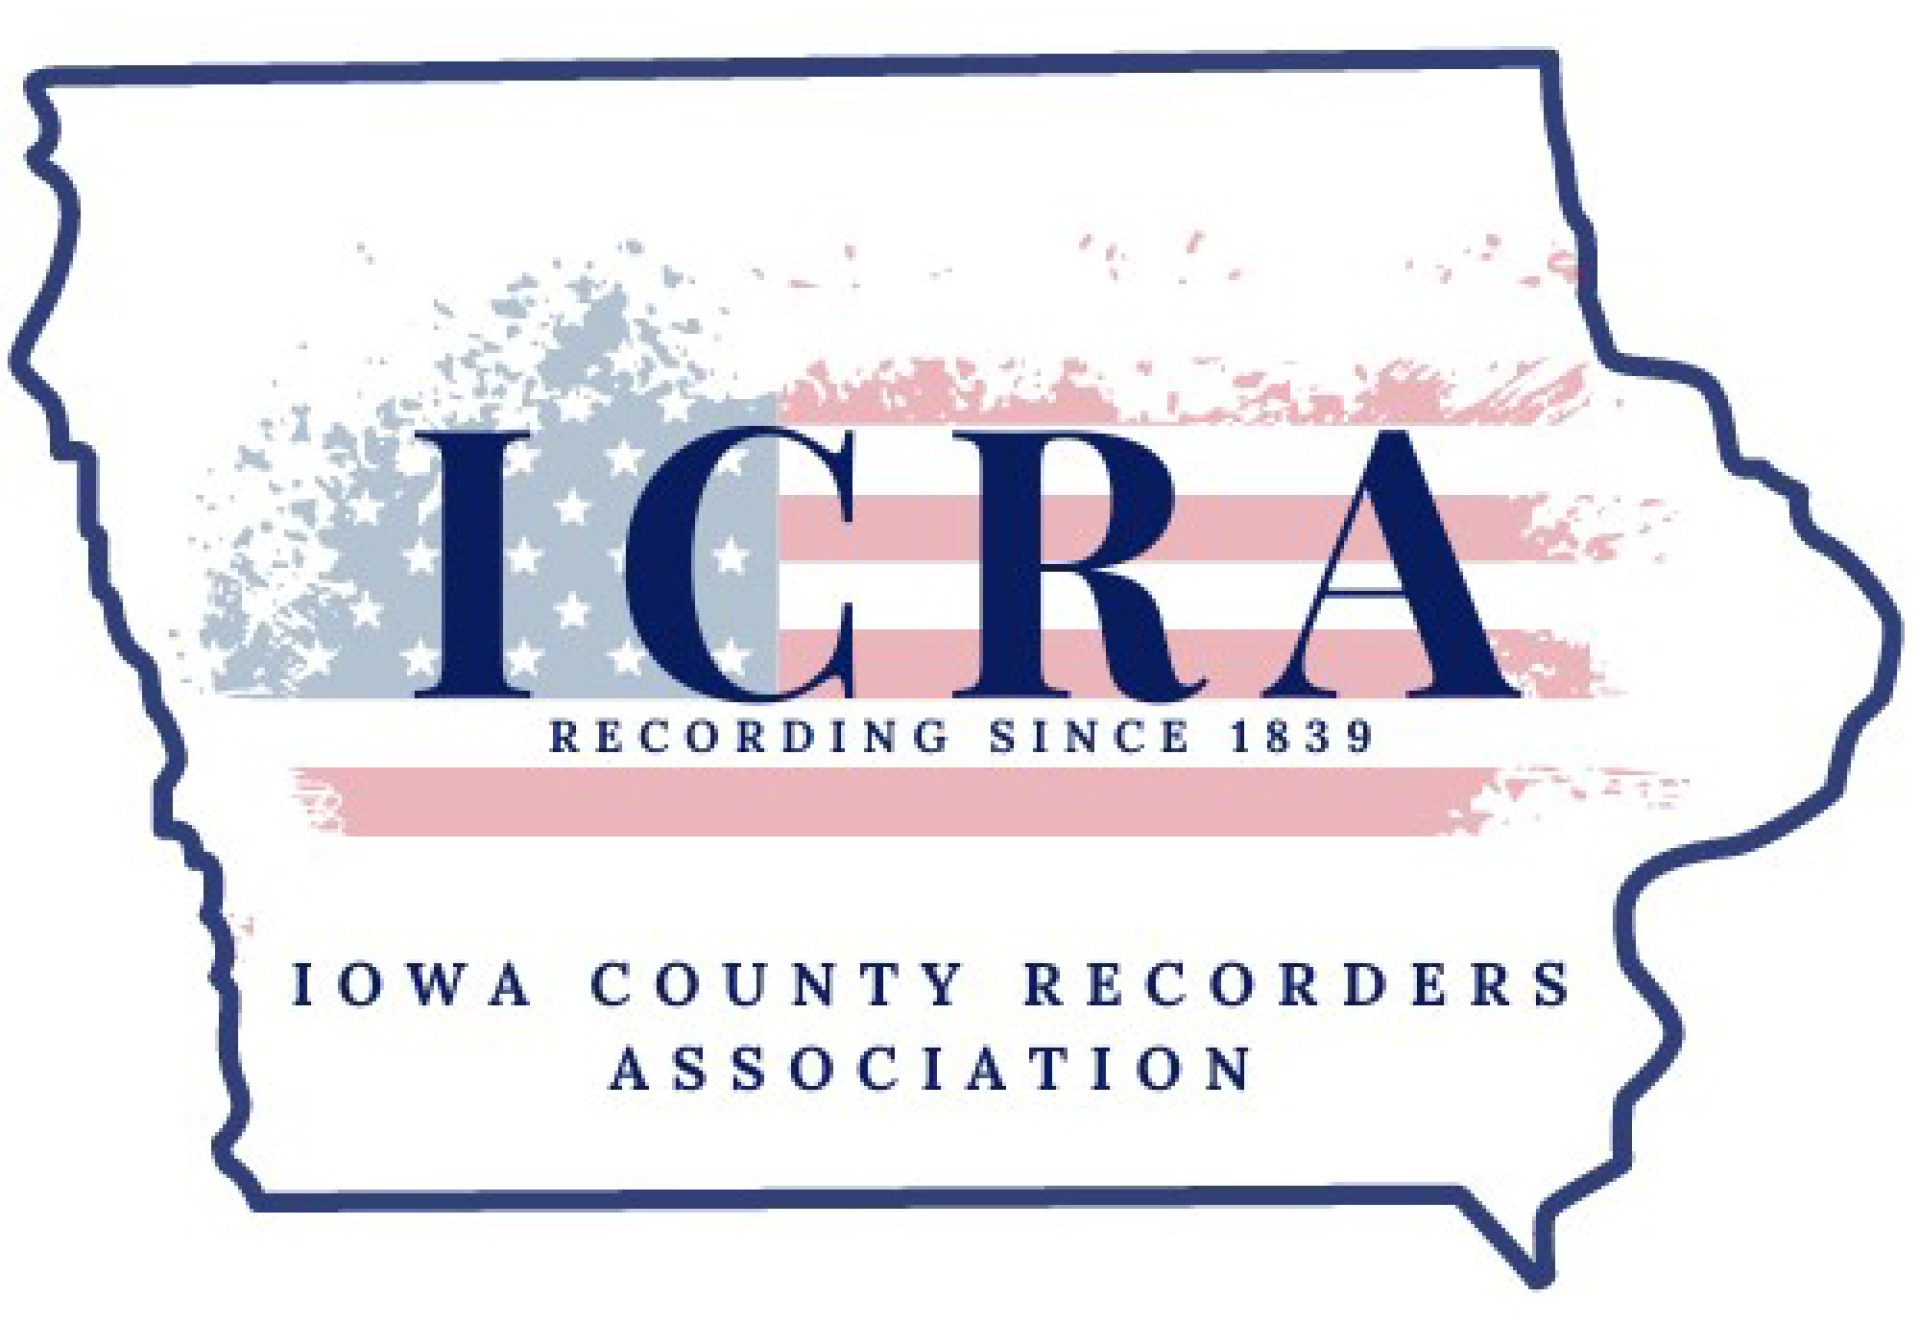 Iowa County Recorders Association